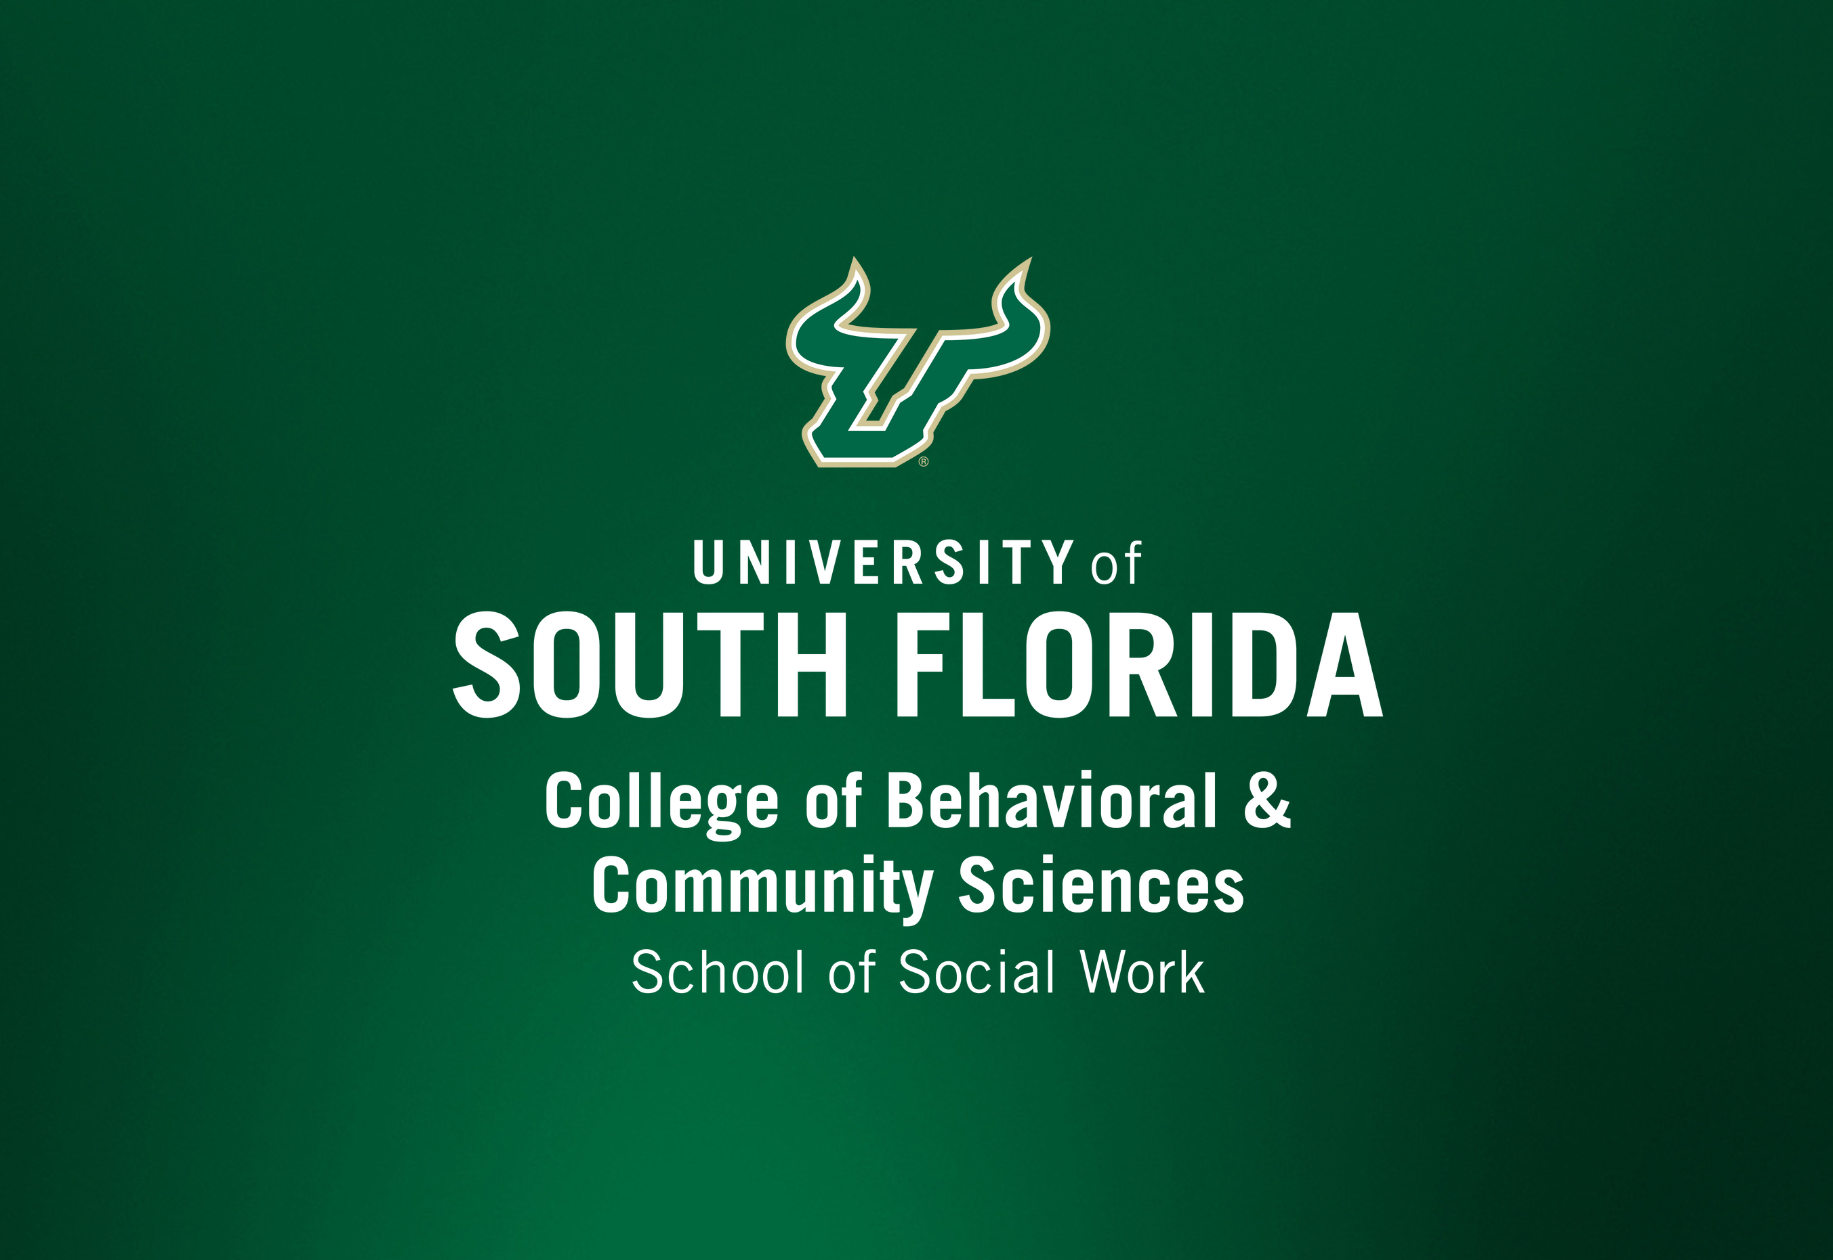 USF social work logo on green background